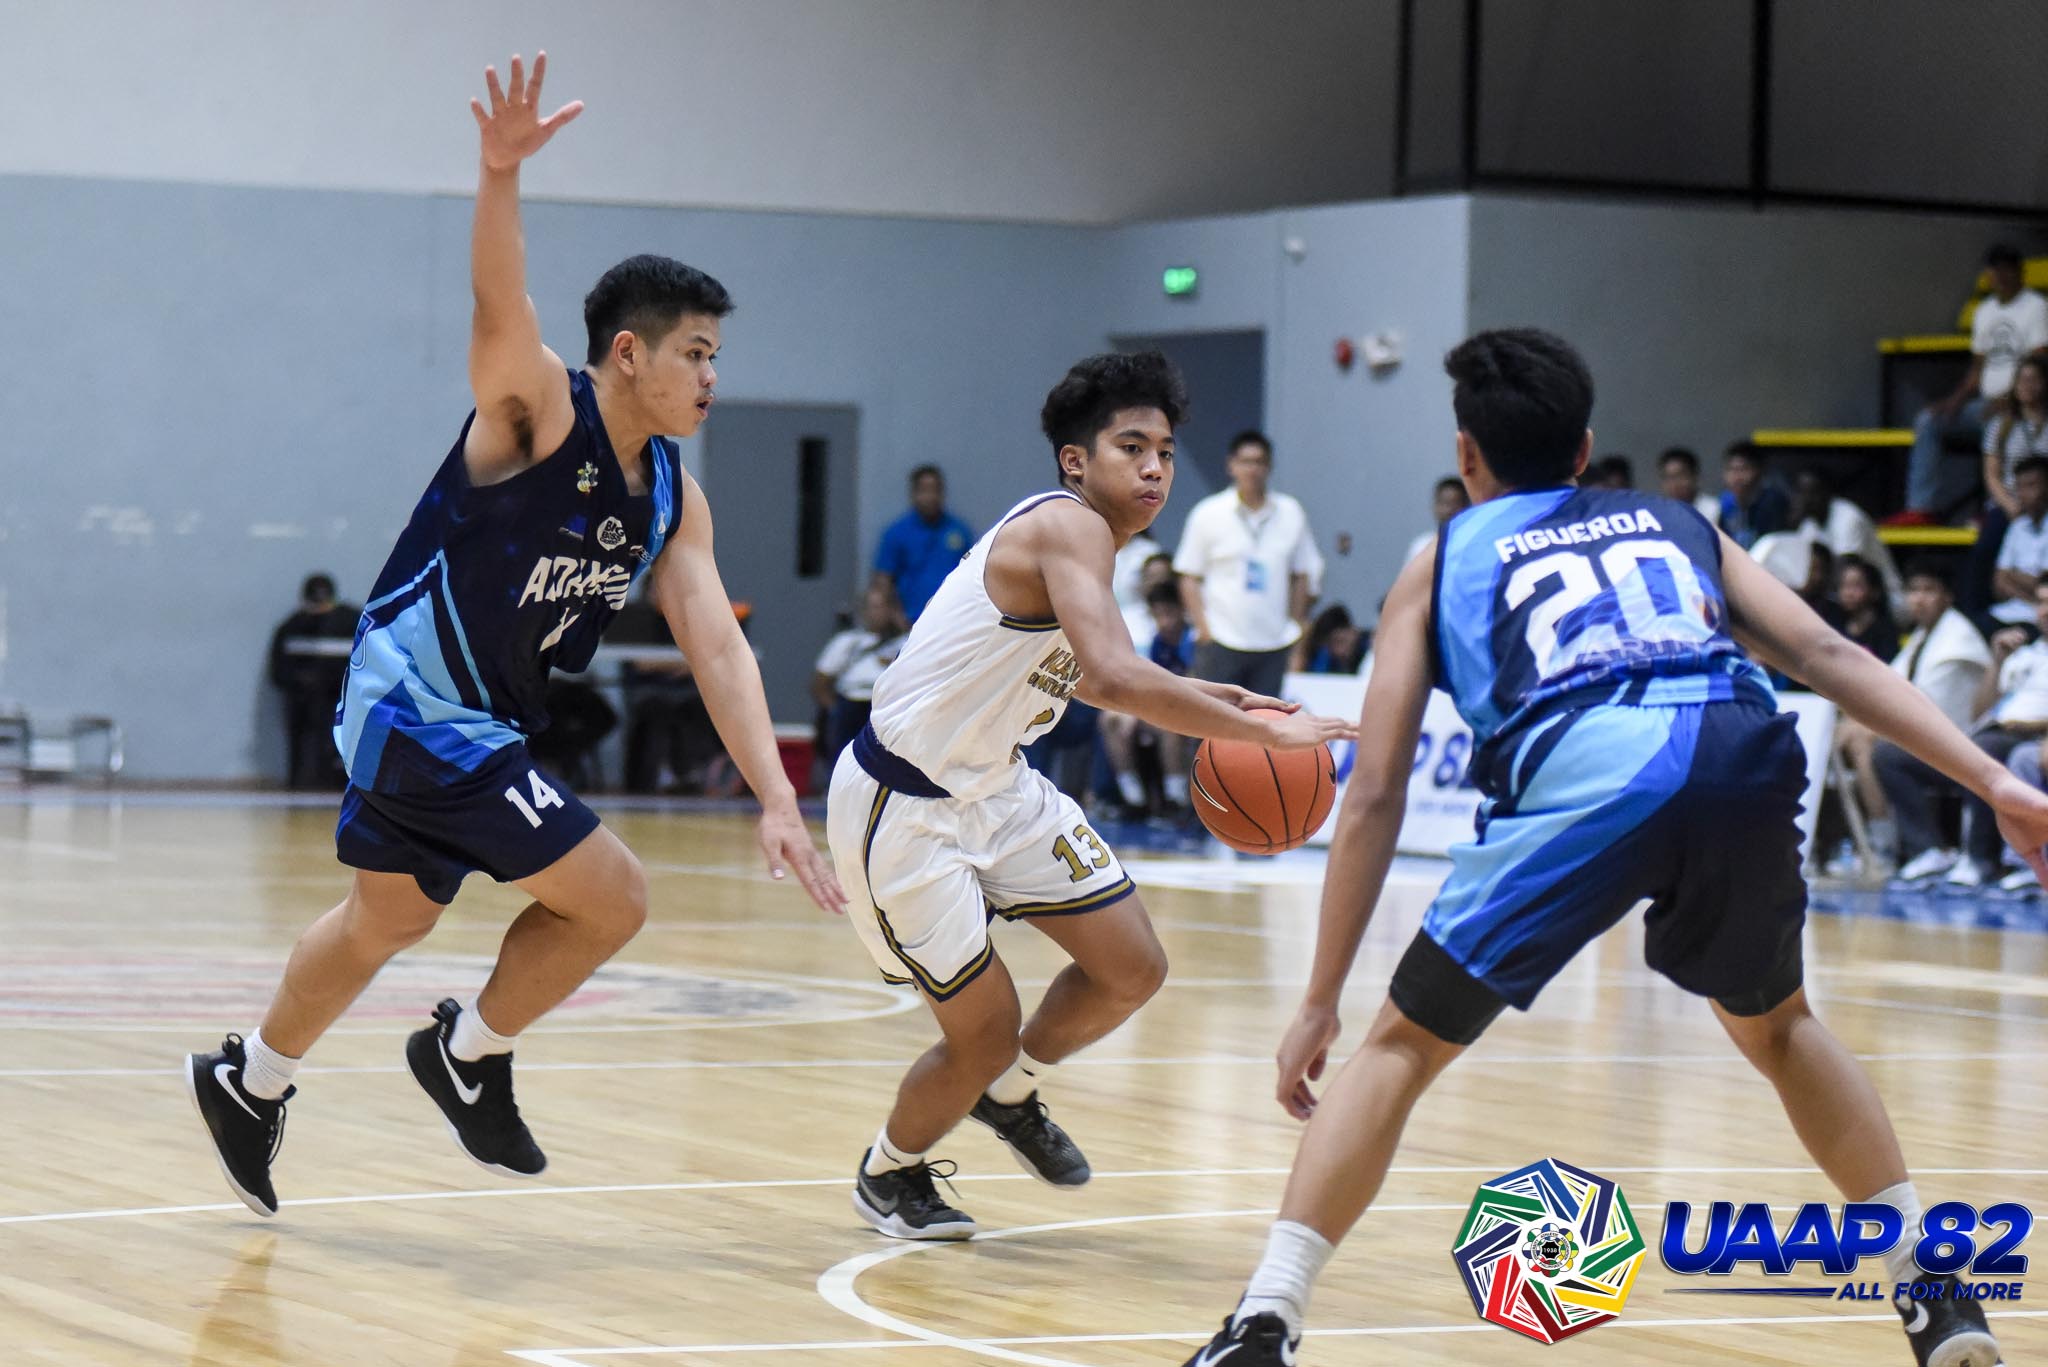 UAAP82-JUNIORS-BASKETBALL-11TH-PHOTO-NU-STEVE-NASH-ENRIQUEZ Steve Nash Enriquez chooses to remain in NU Basketball News NU UAAP  - philippine sports news